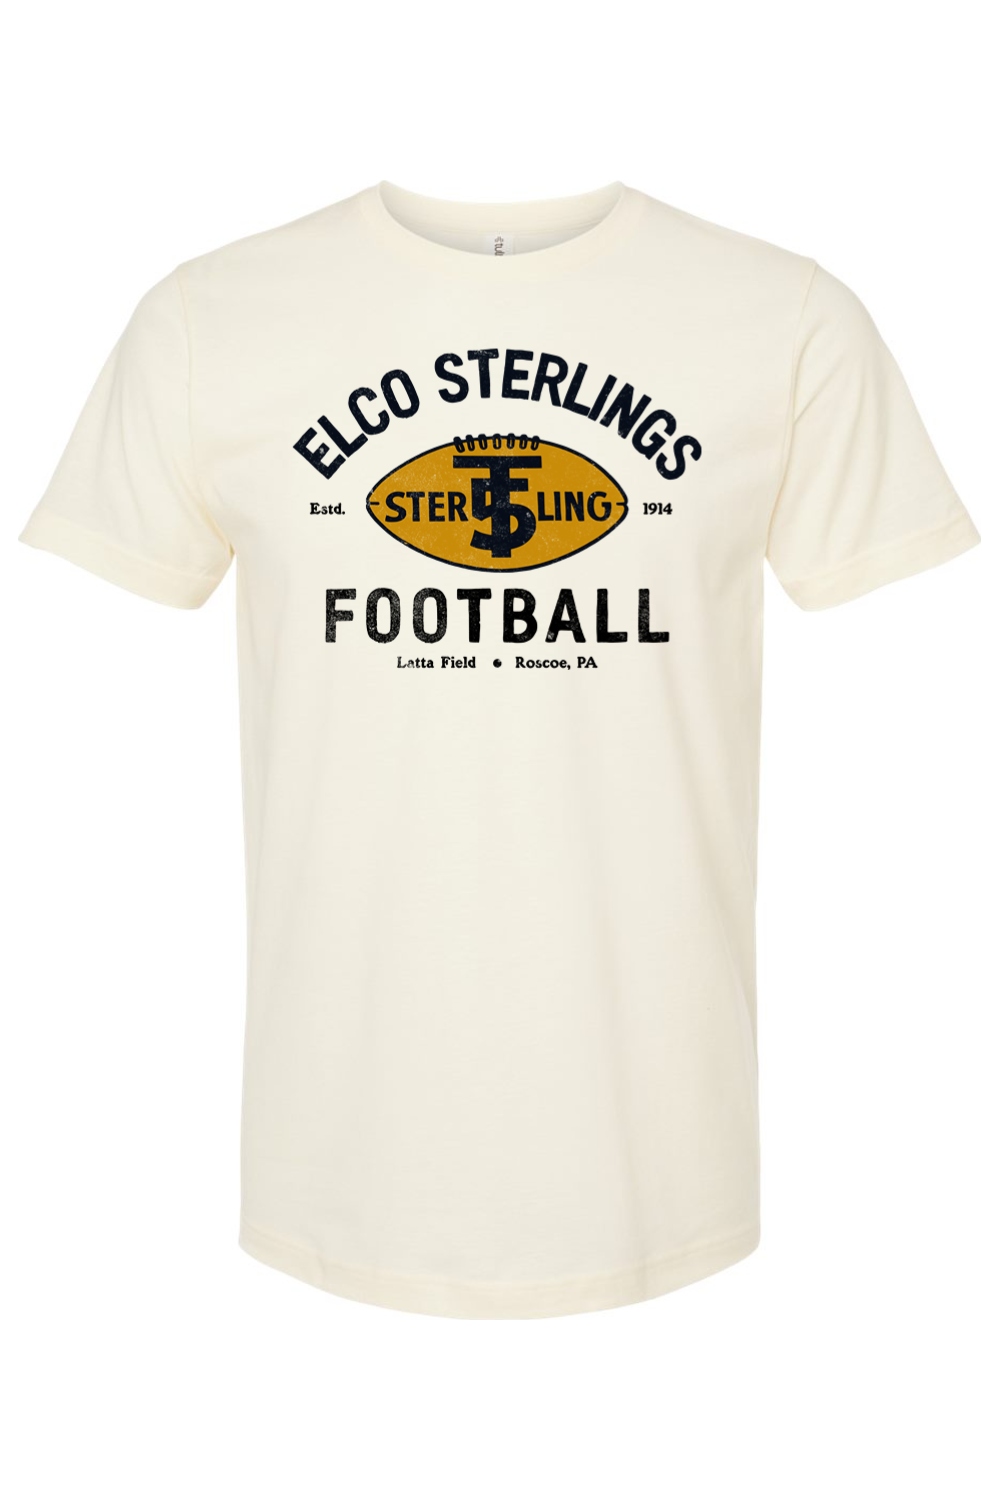 Elco Sterlings Football - 1914 - Yinzylvania